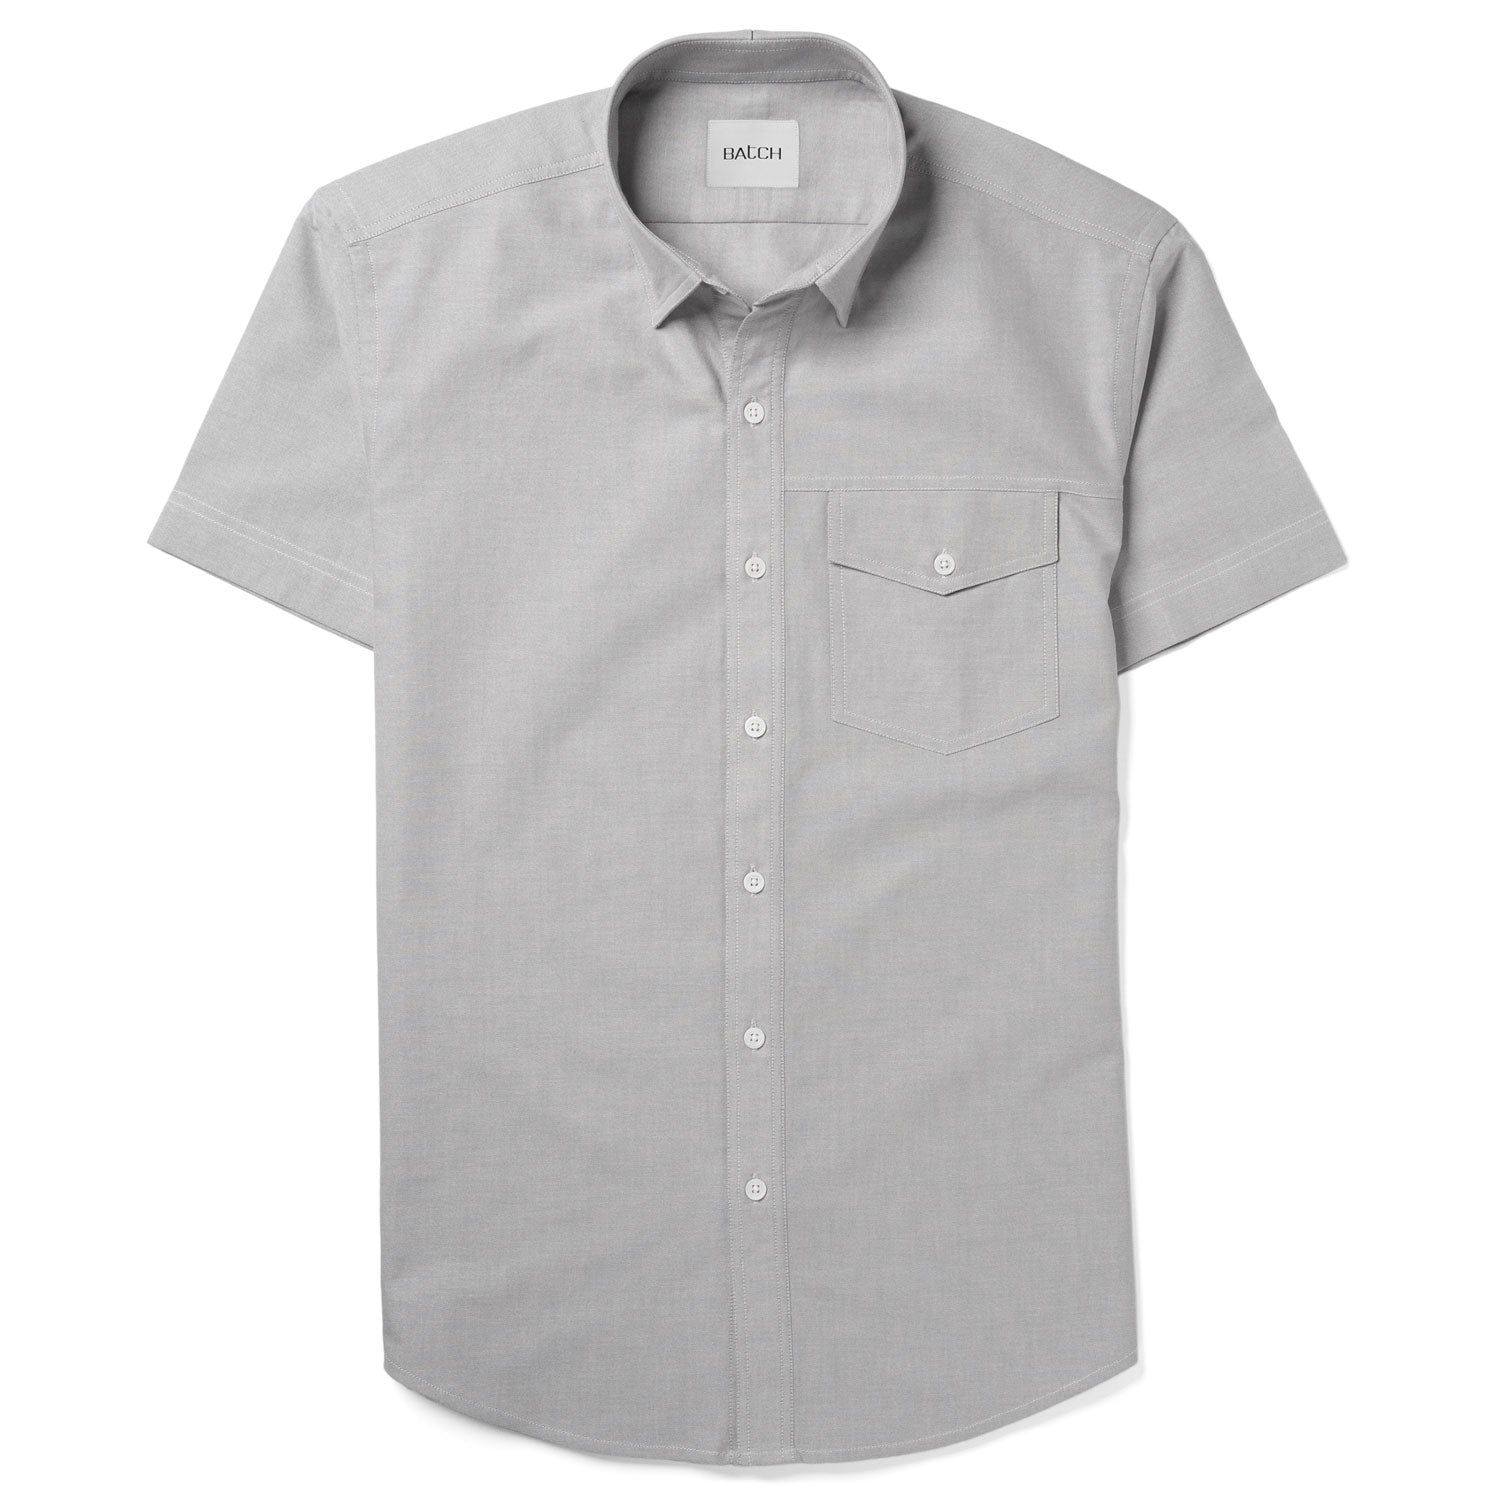 Author Short Sleeve Casual Shirt – Aluminum Gray Cotton Oxford